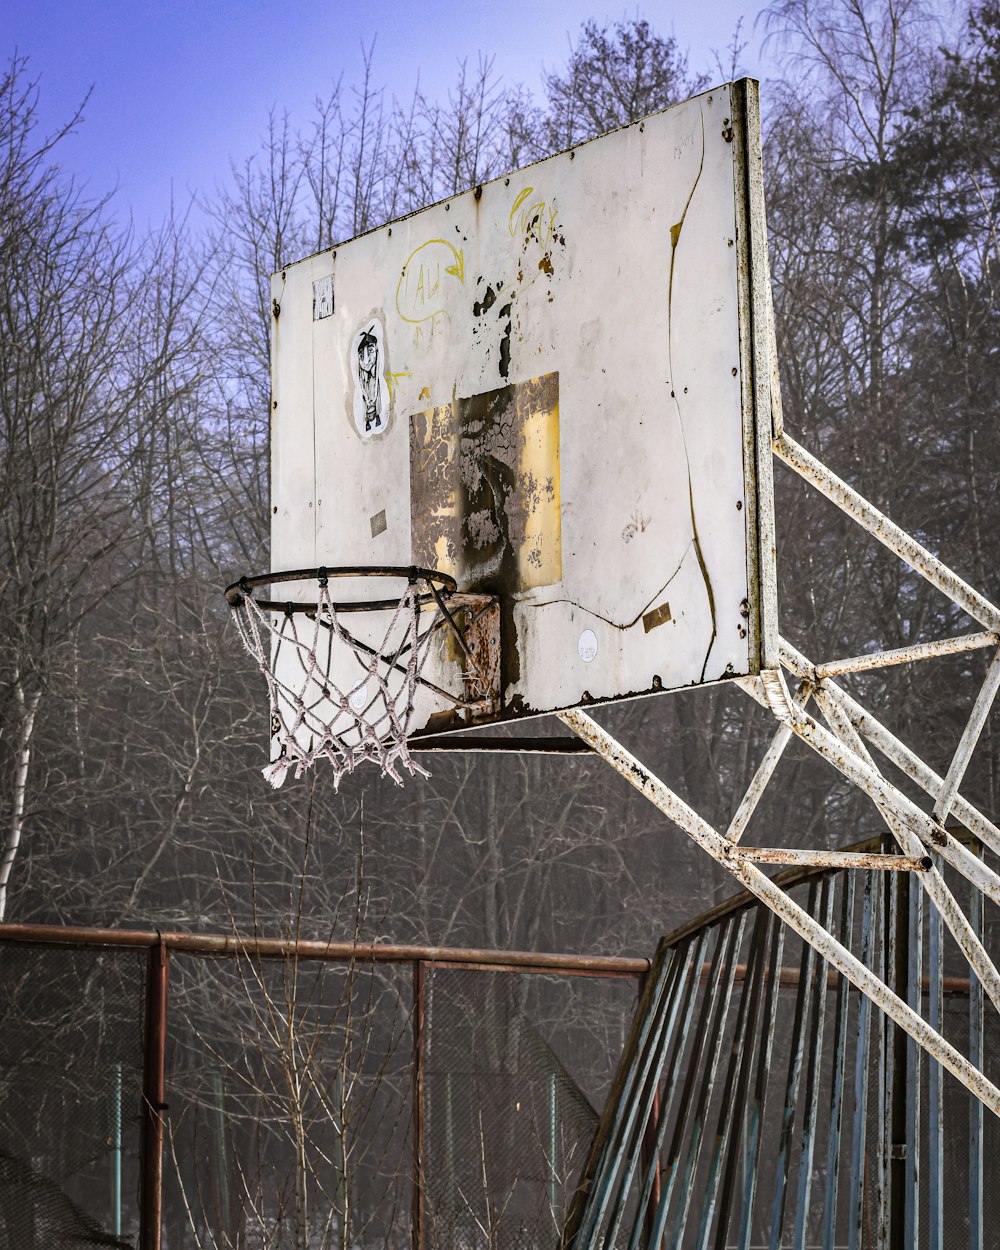 an old basketball hoop with a broken backboard